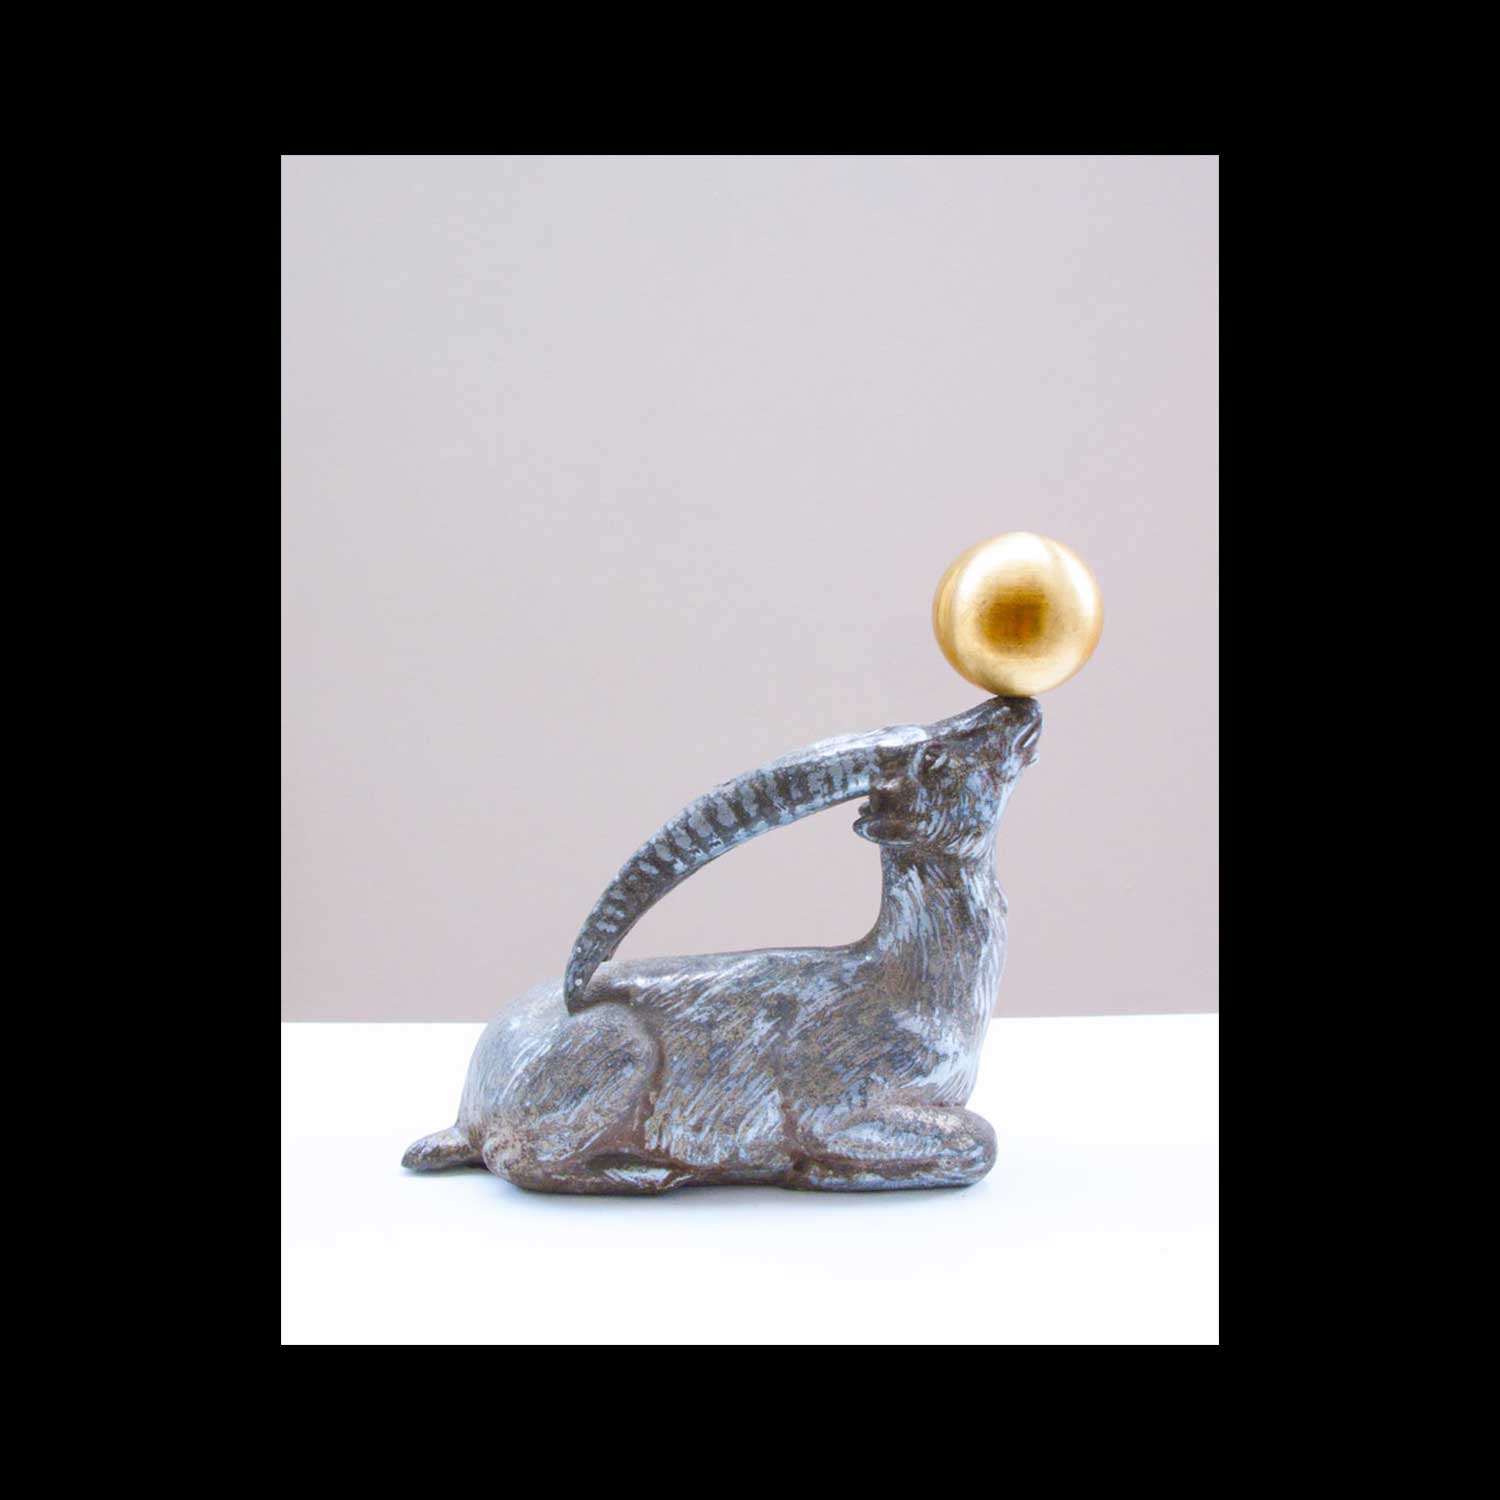 Stéphane Vigny, Bouquetin imitant l’otarie, (Ibex imitating a sea lion), 2015. Pewter, brass, 15 x 14 cm. Unique creation